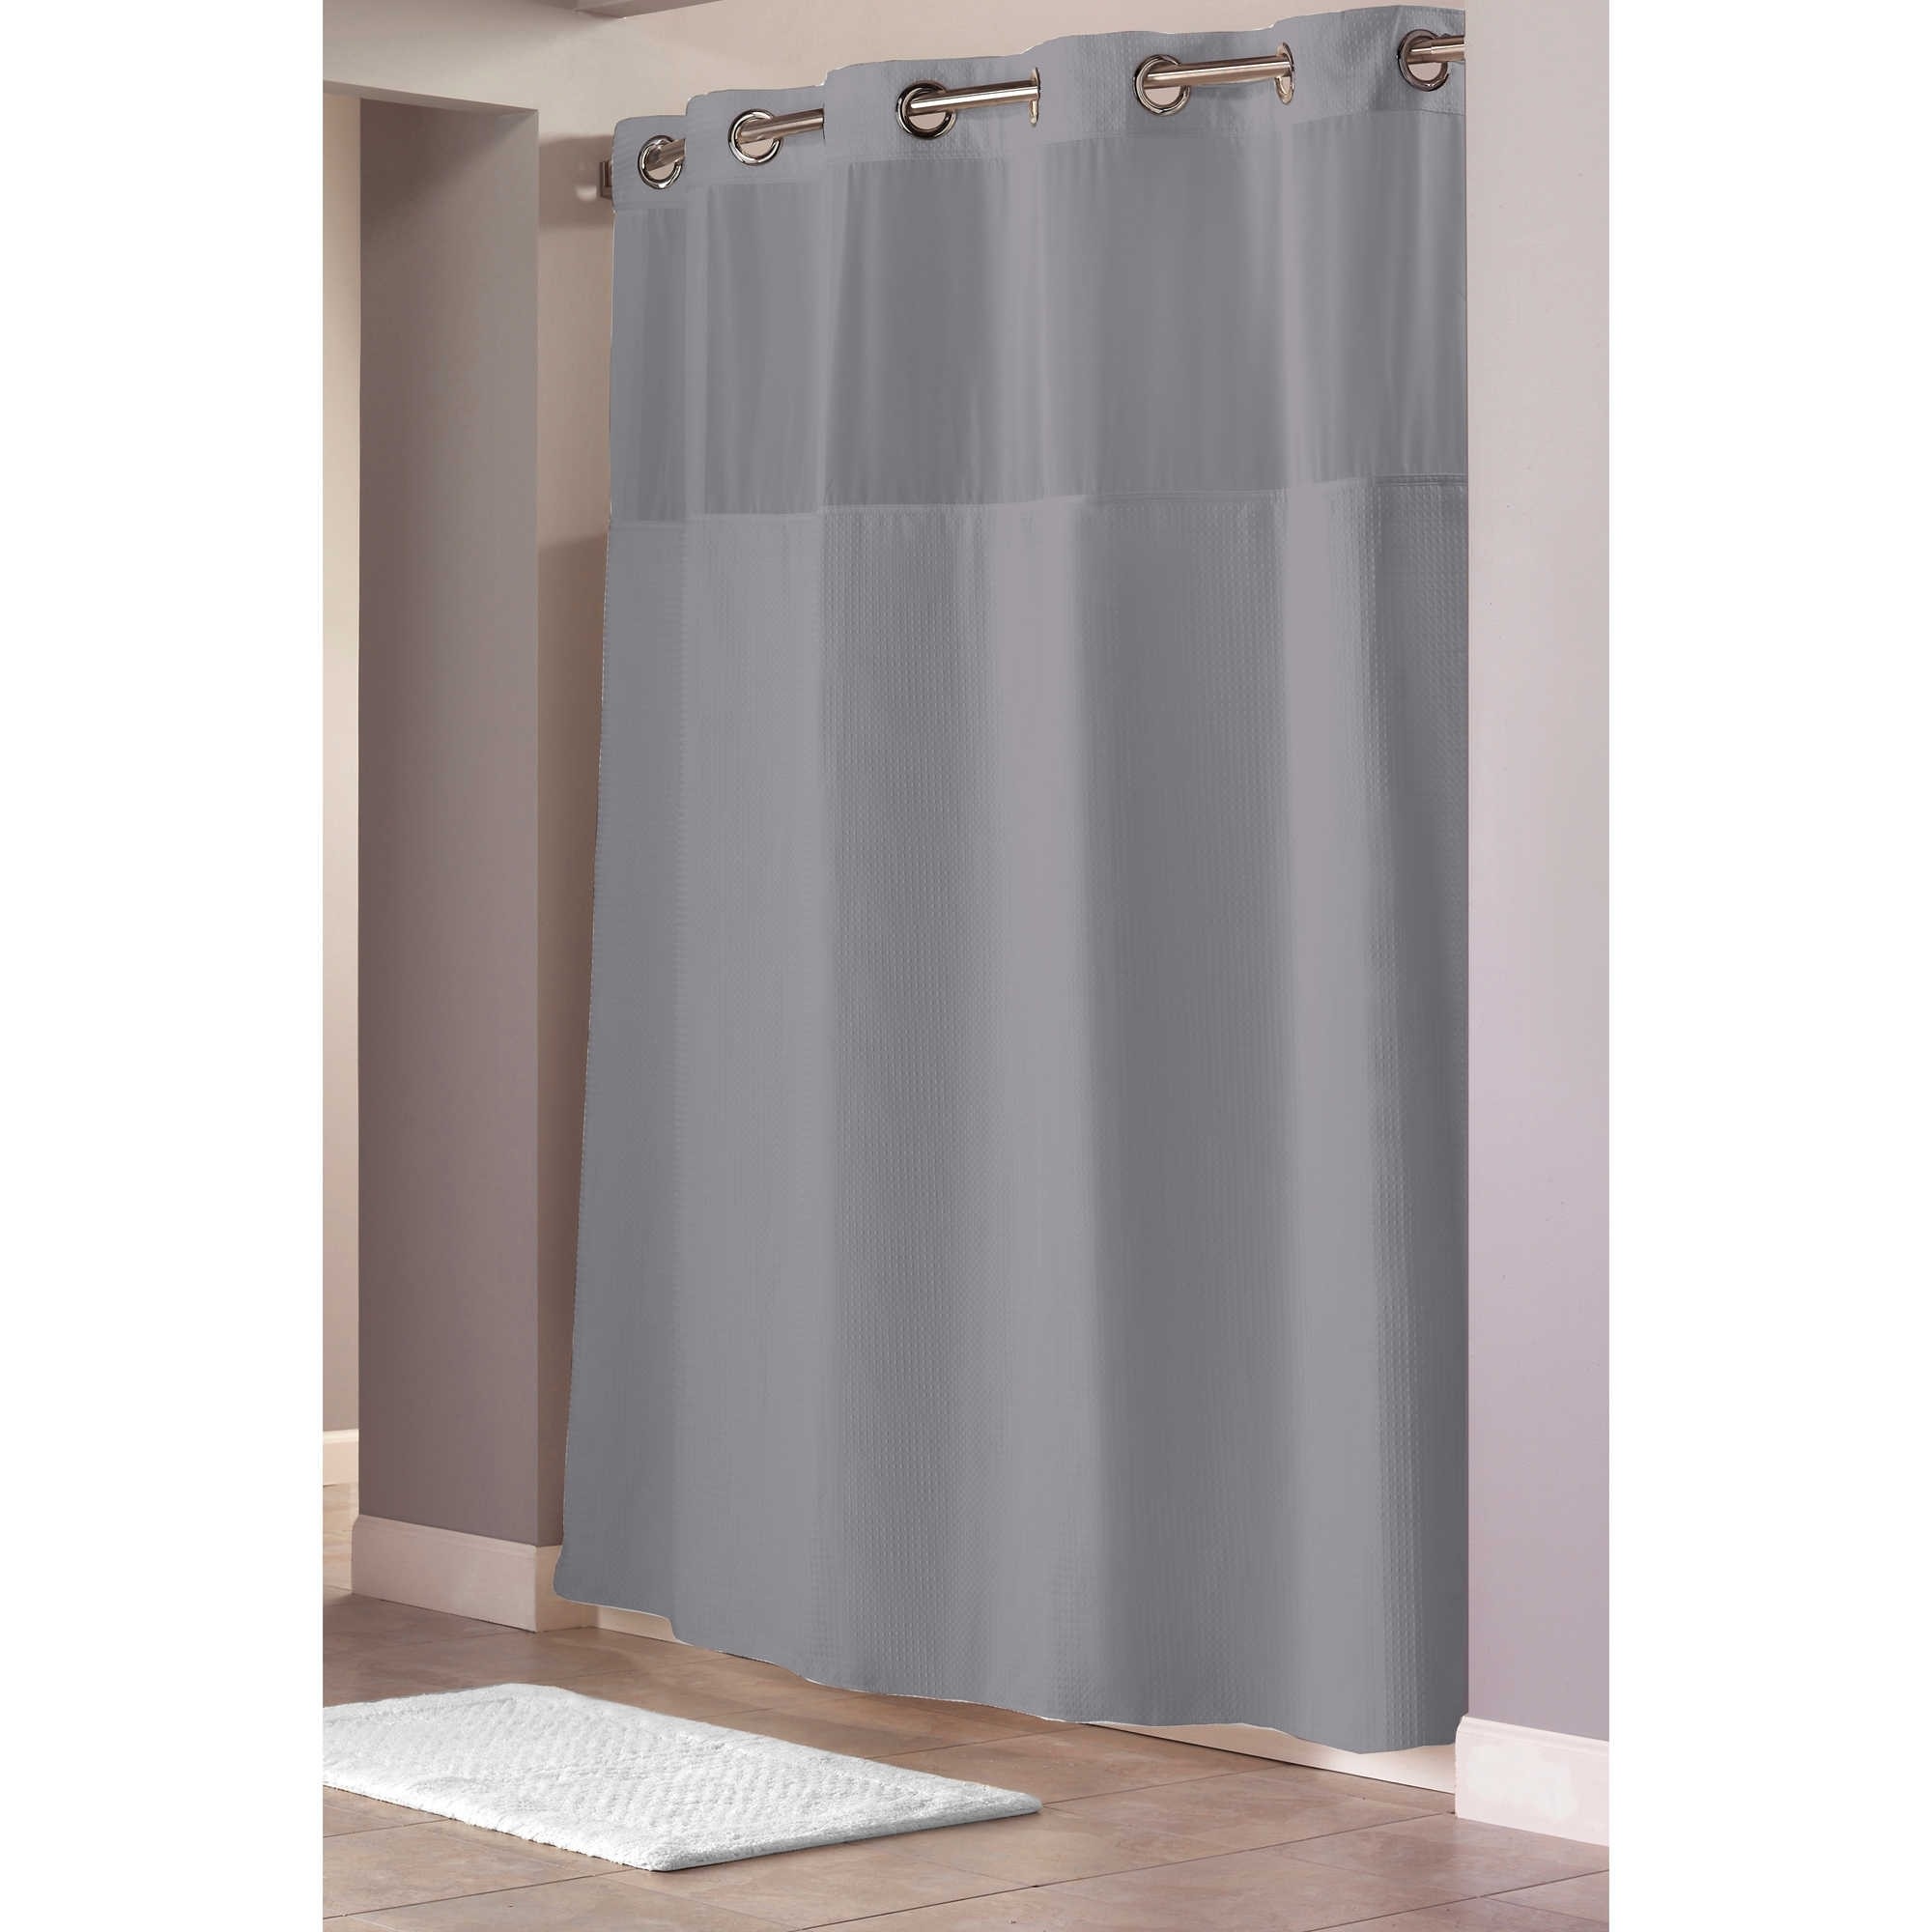 Shower stall curtain 54 x 78 shower curtain